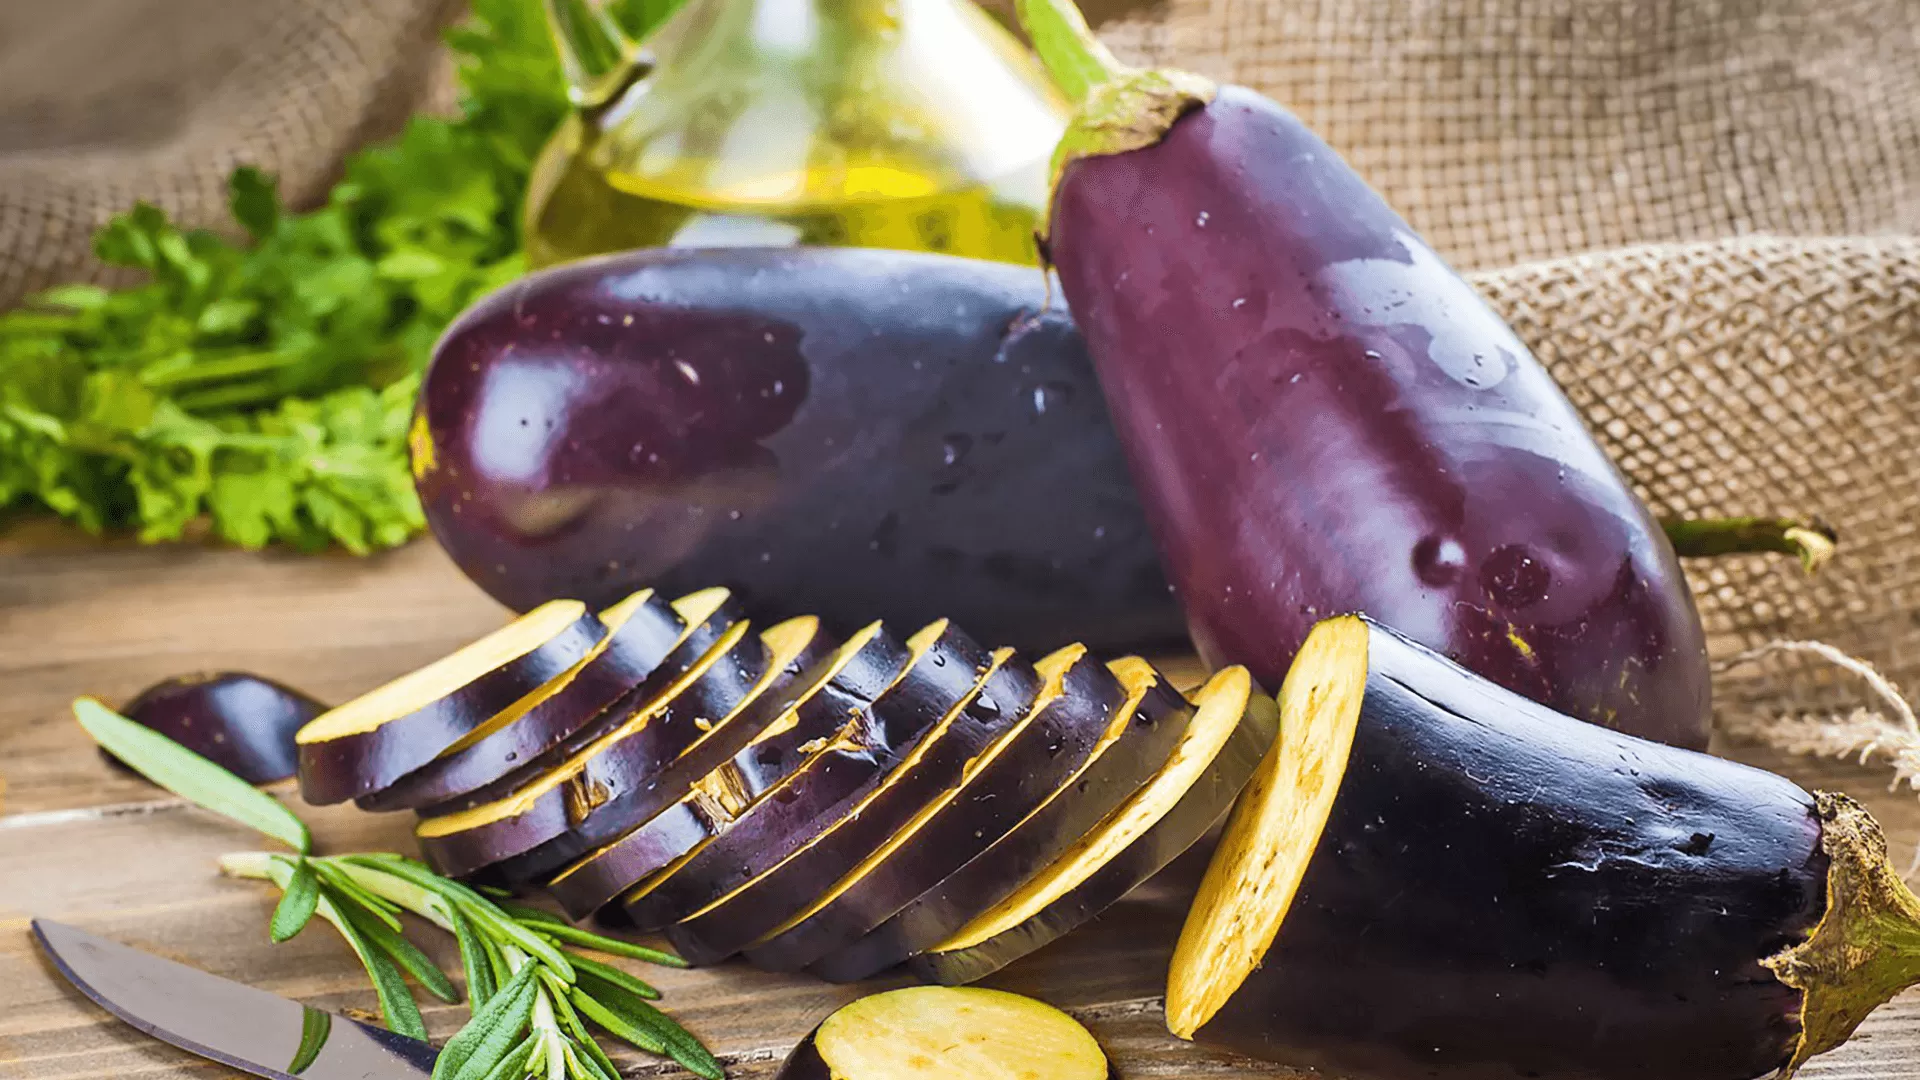 Whole and Sliced Eggplants